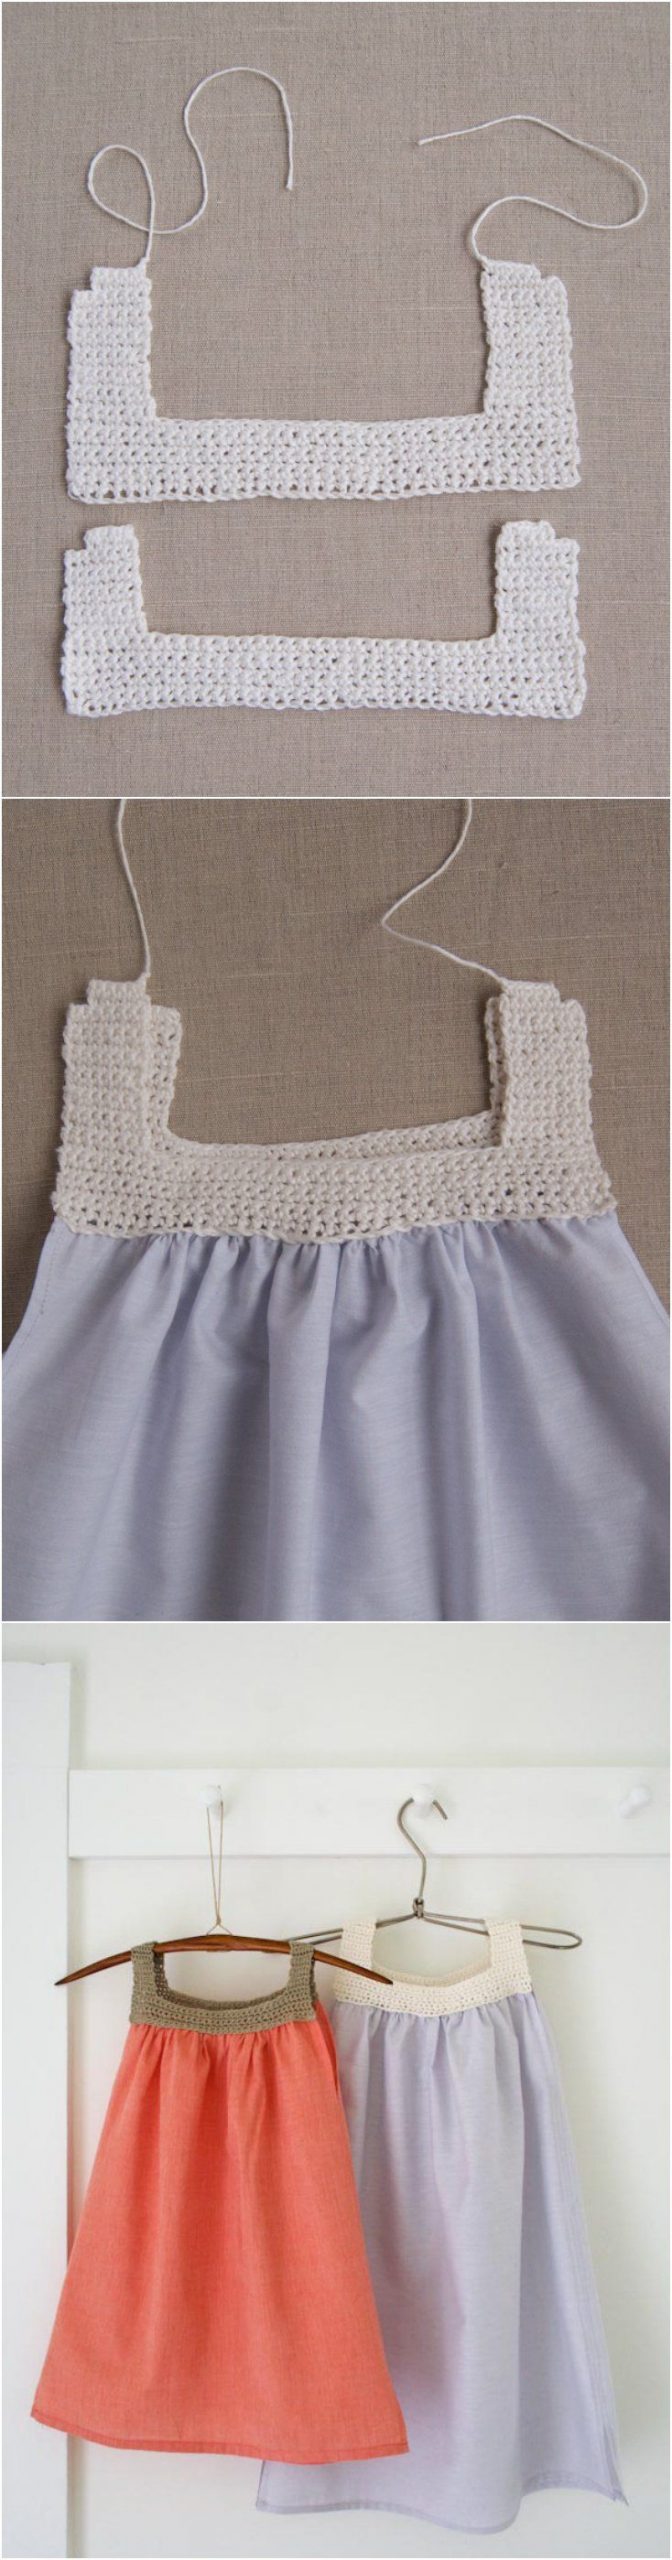 10-Free-Crochet-and-Fabric-Dress-Patterns.jpg